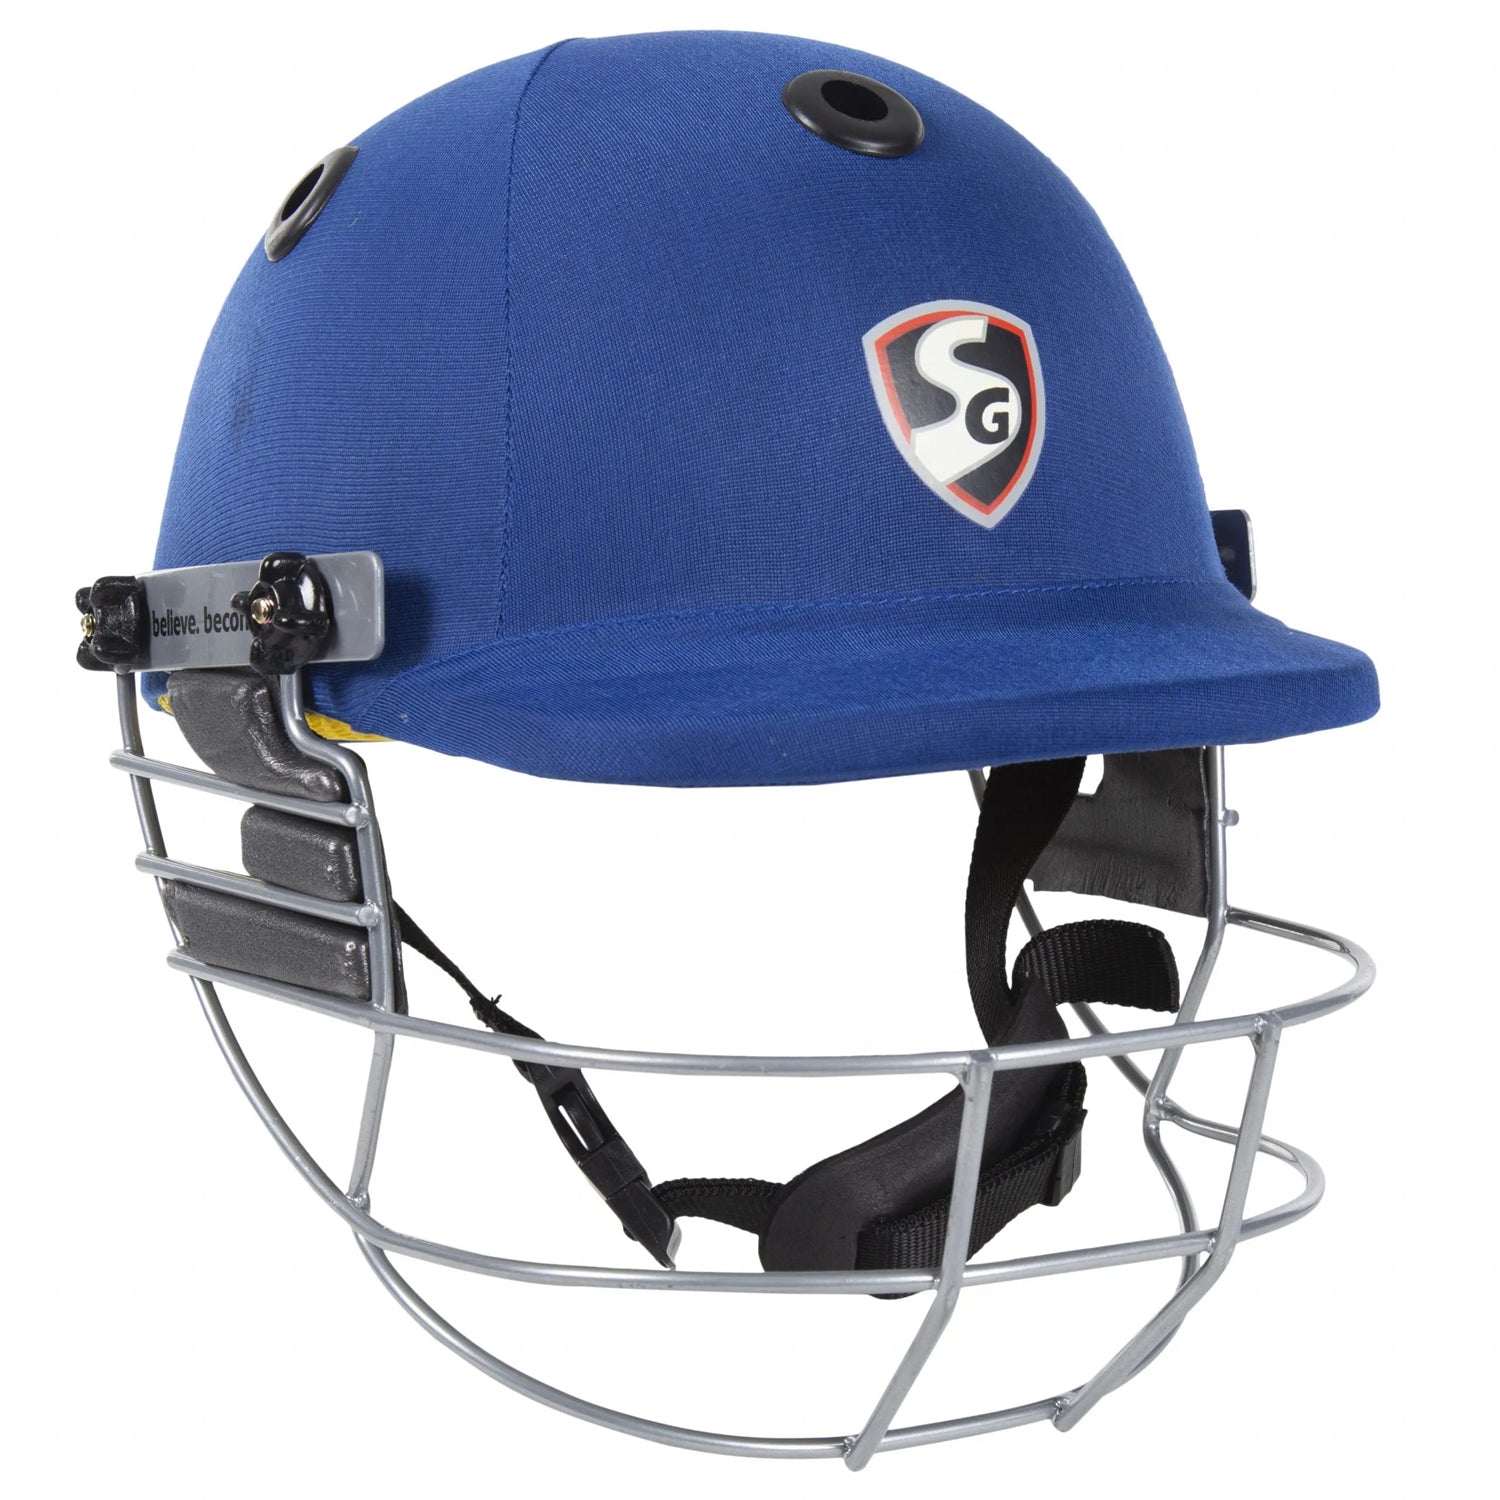 SG BlazeTech Cricket Helmet, Blue - Best Price online Prokicksports.com